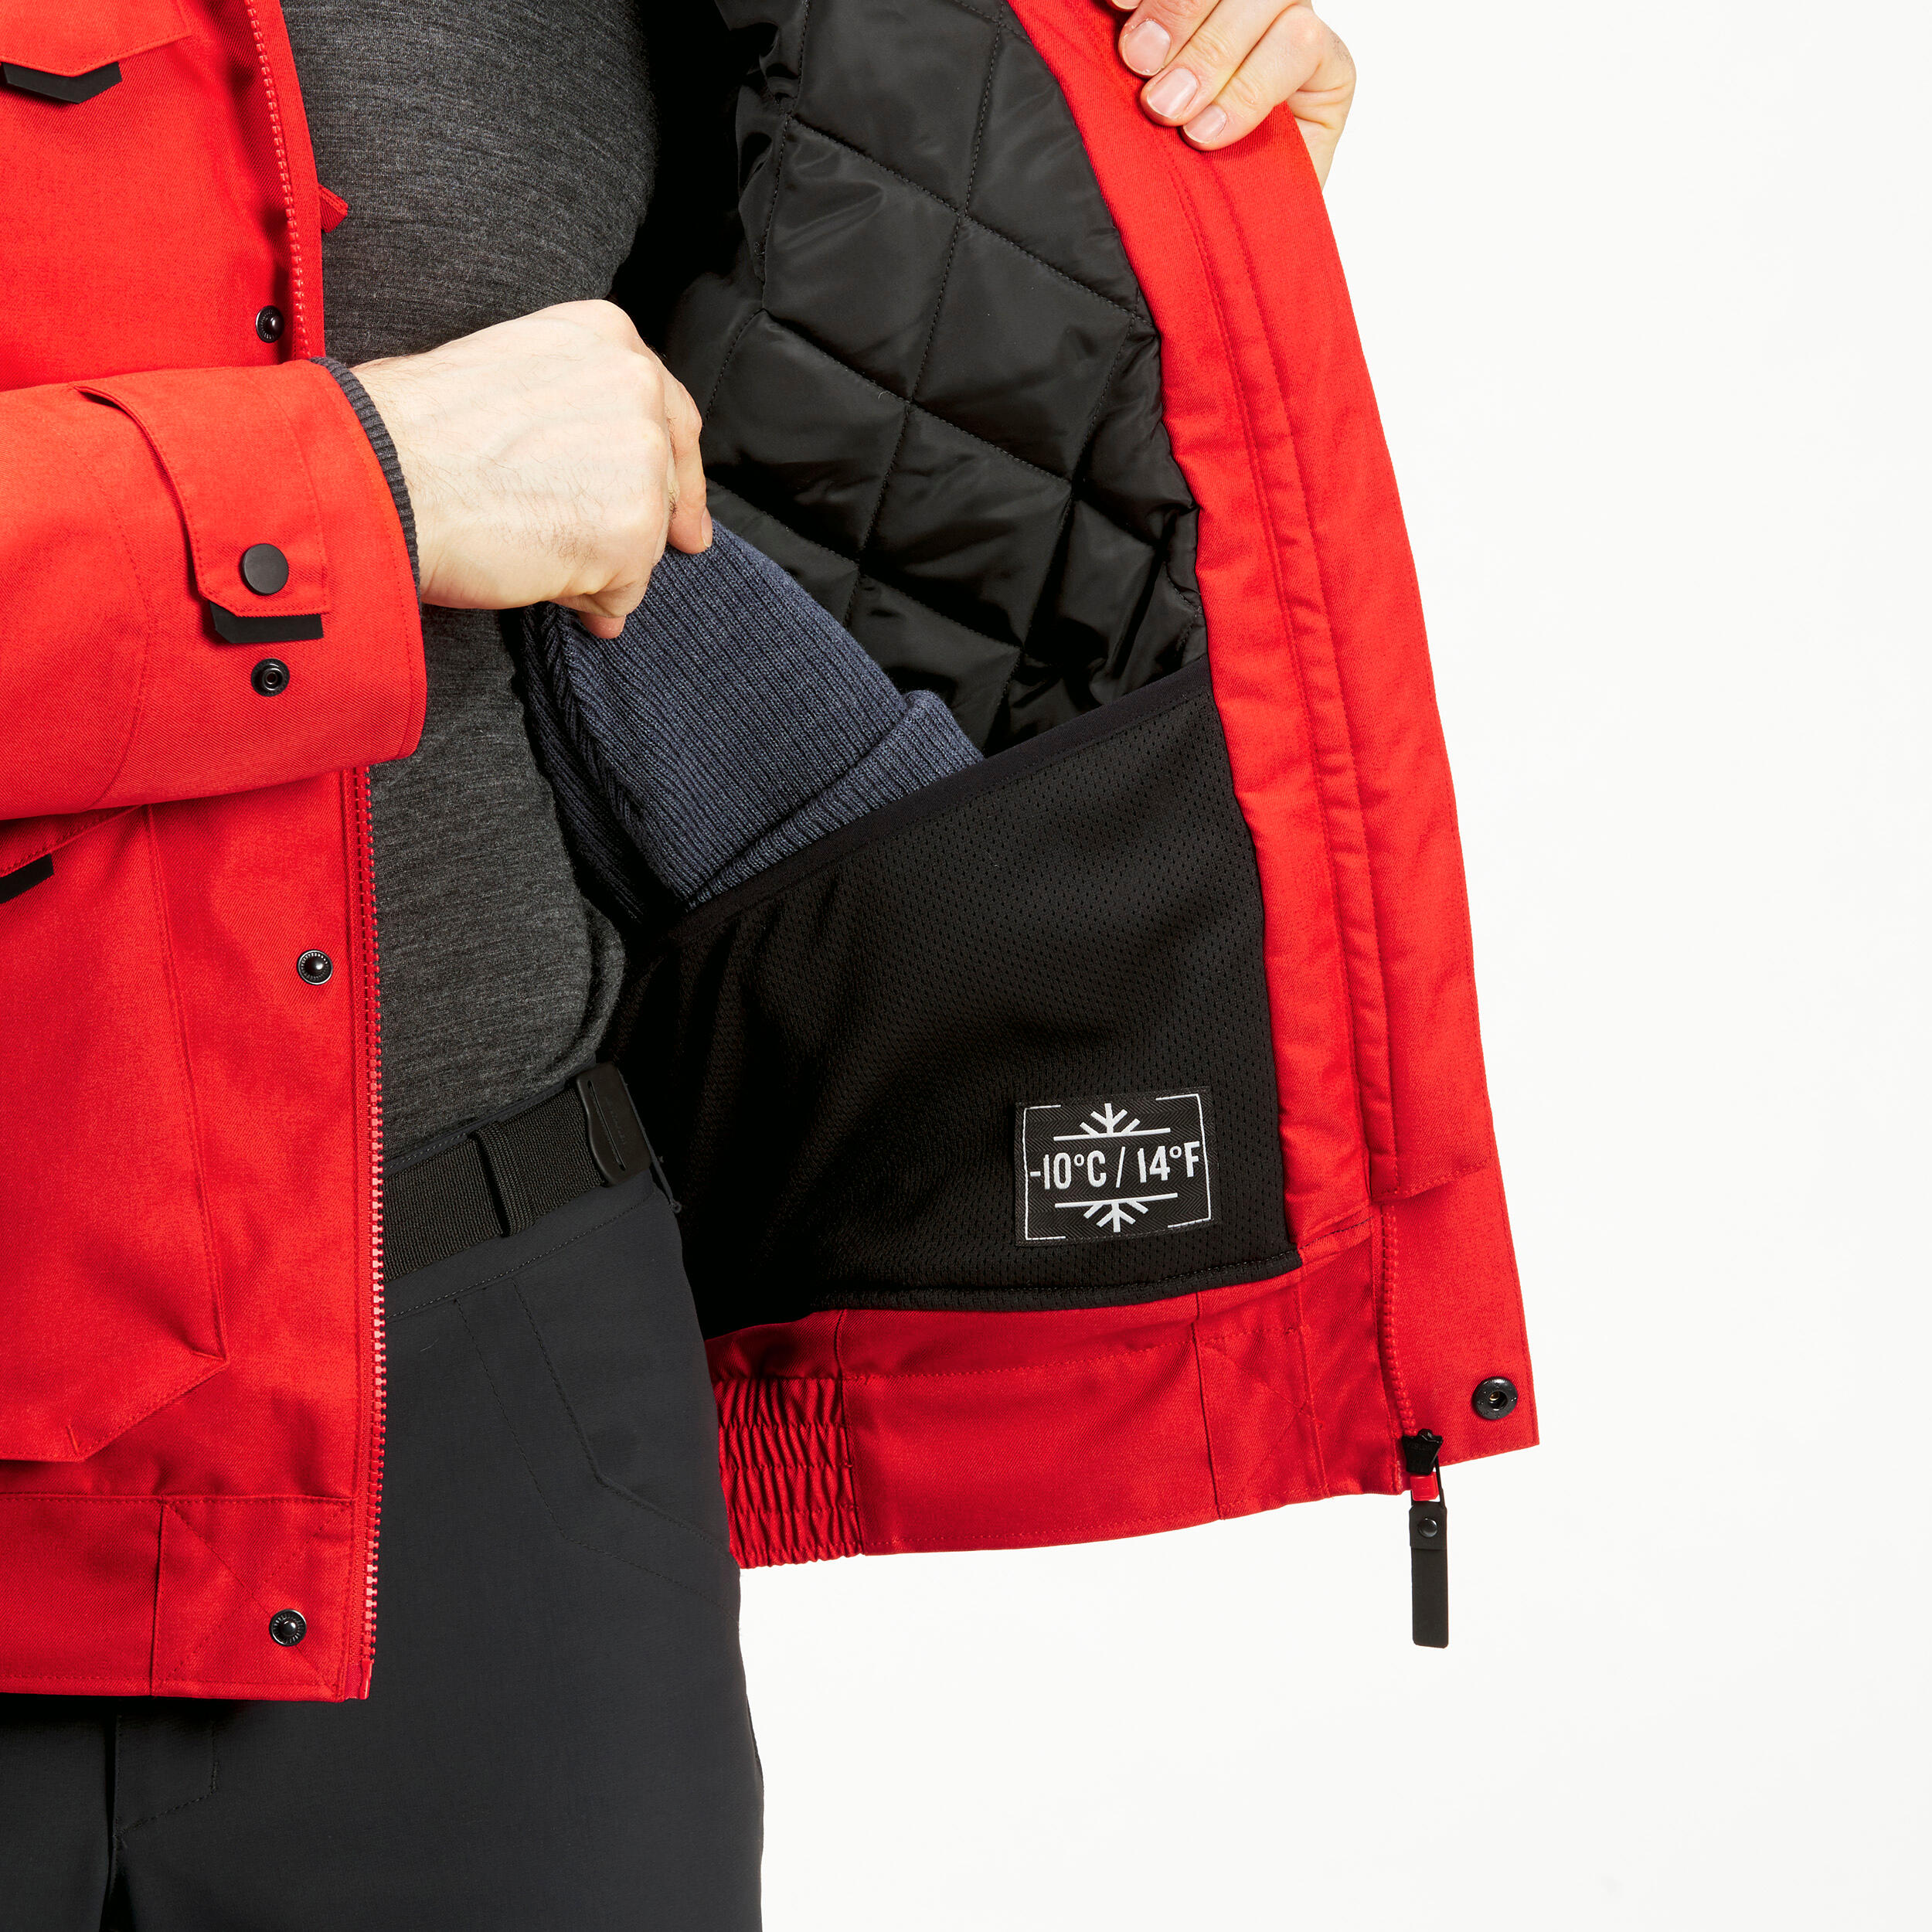 Men’s Waterproof Winter Hiking Jacket SH500 -10°C 7/11